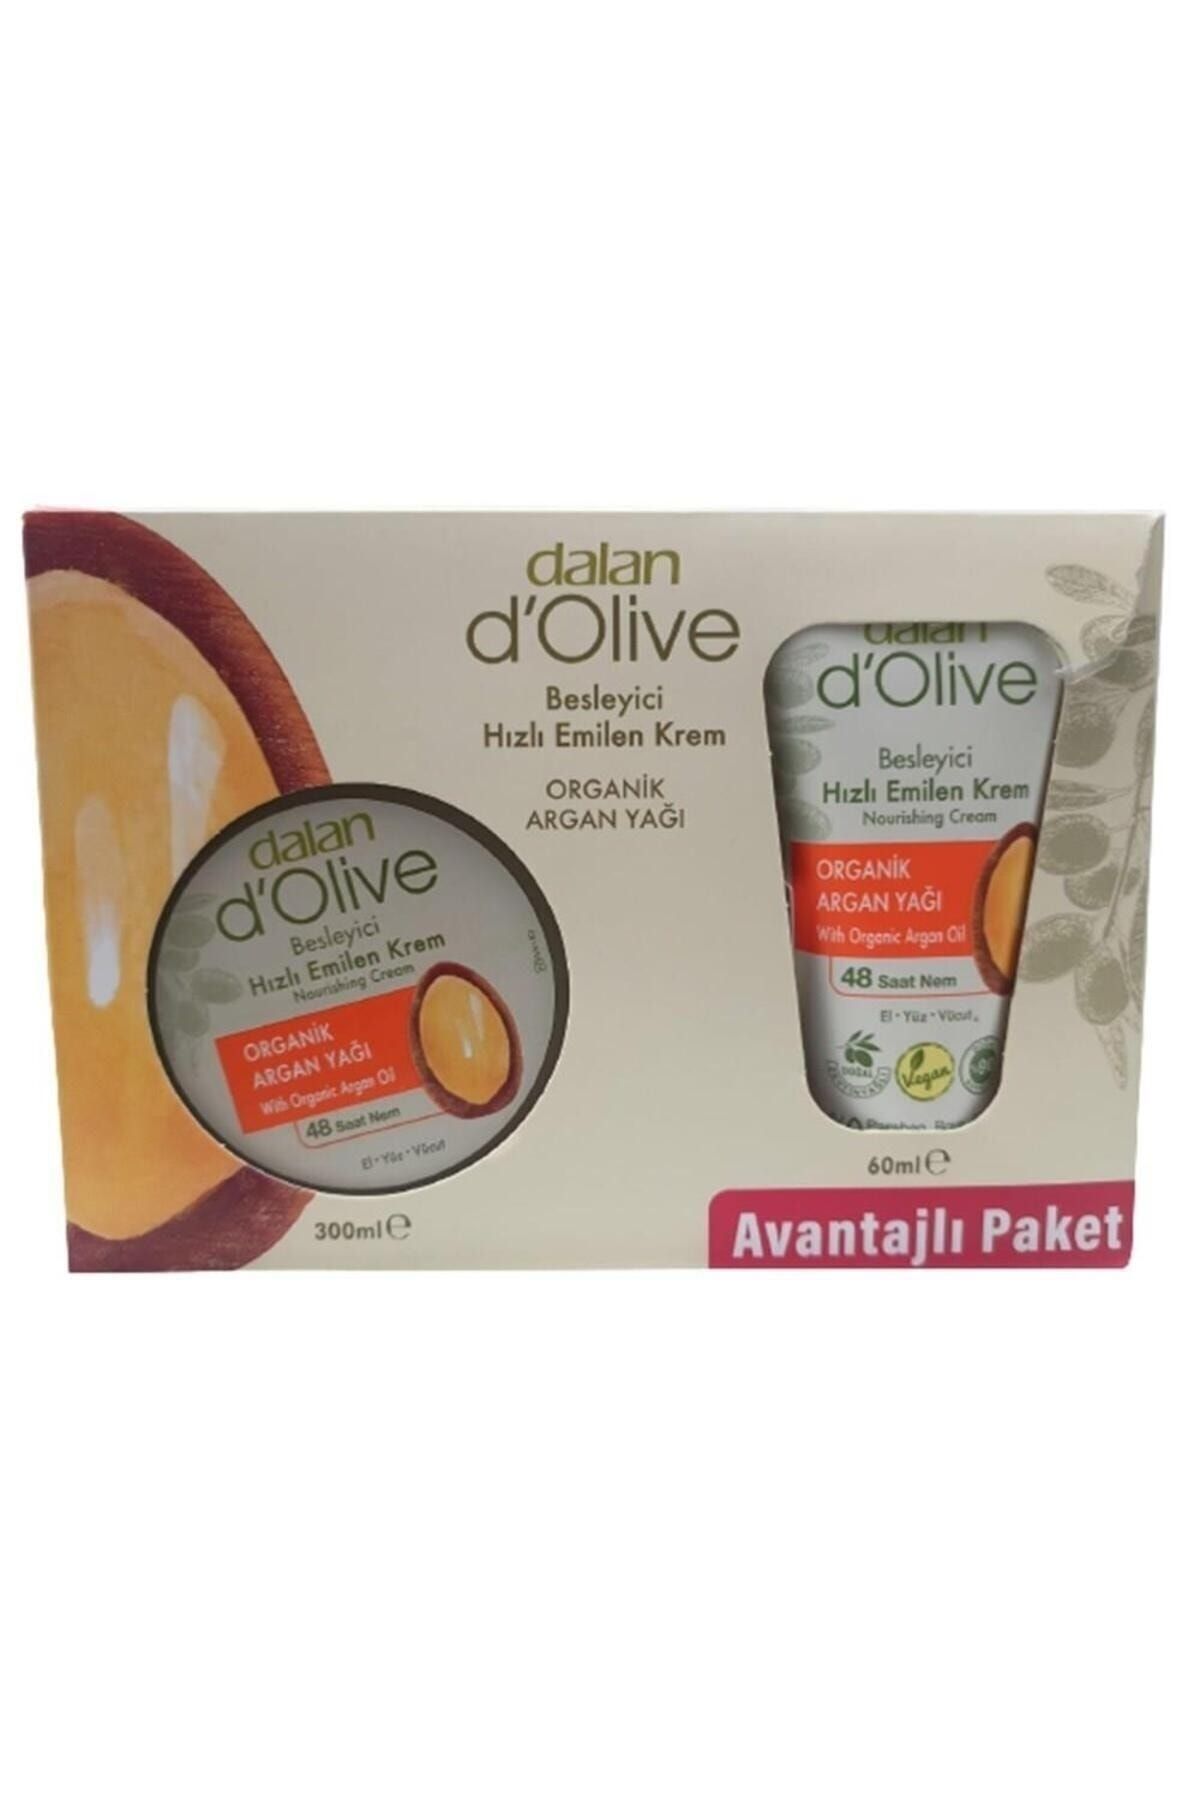 Dalan D'olive Organik Argan Yağı Krem 300 ml 60 ml Avantajlı Paket